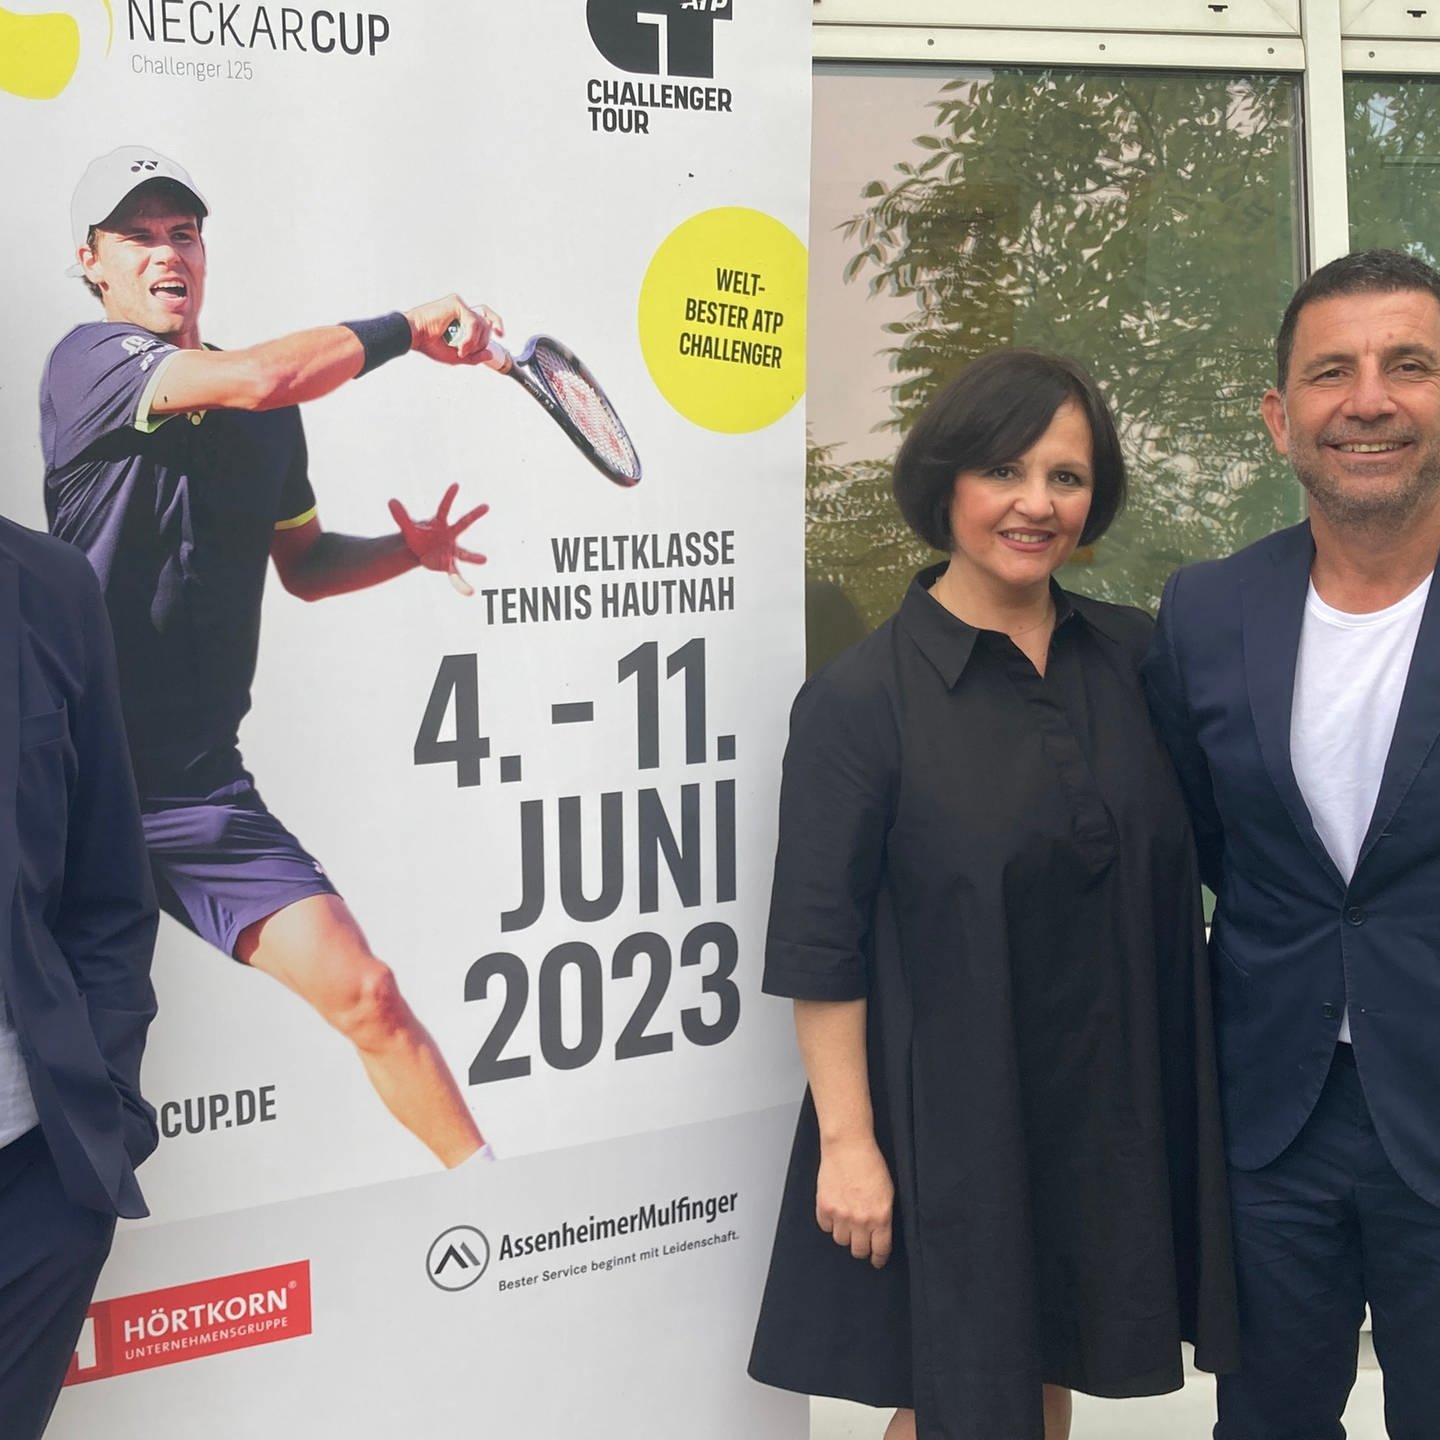 Weltklasse-Tennis beim Heilbronner NECKARCUP